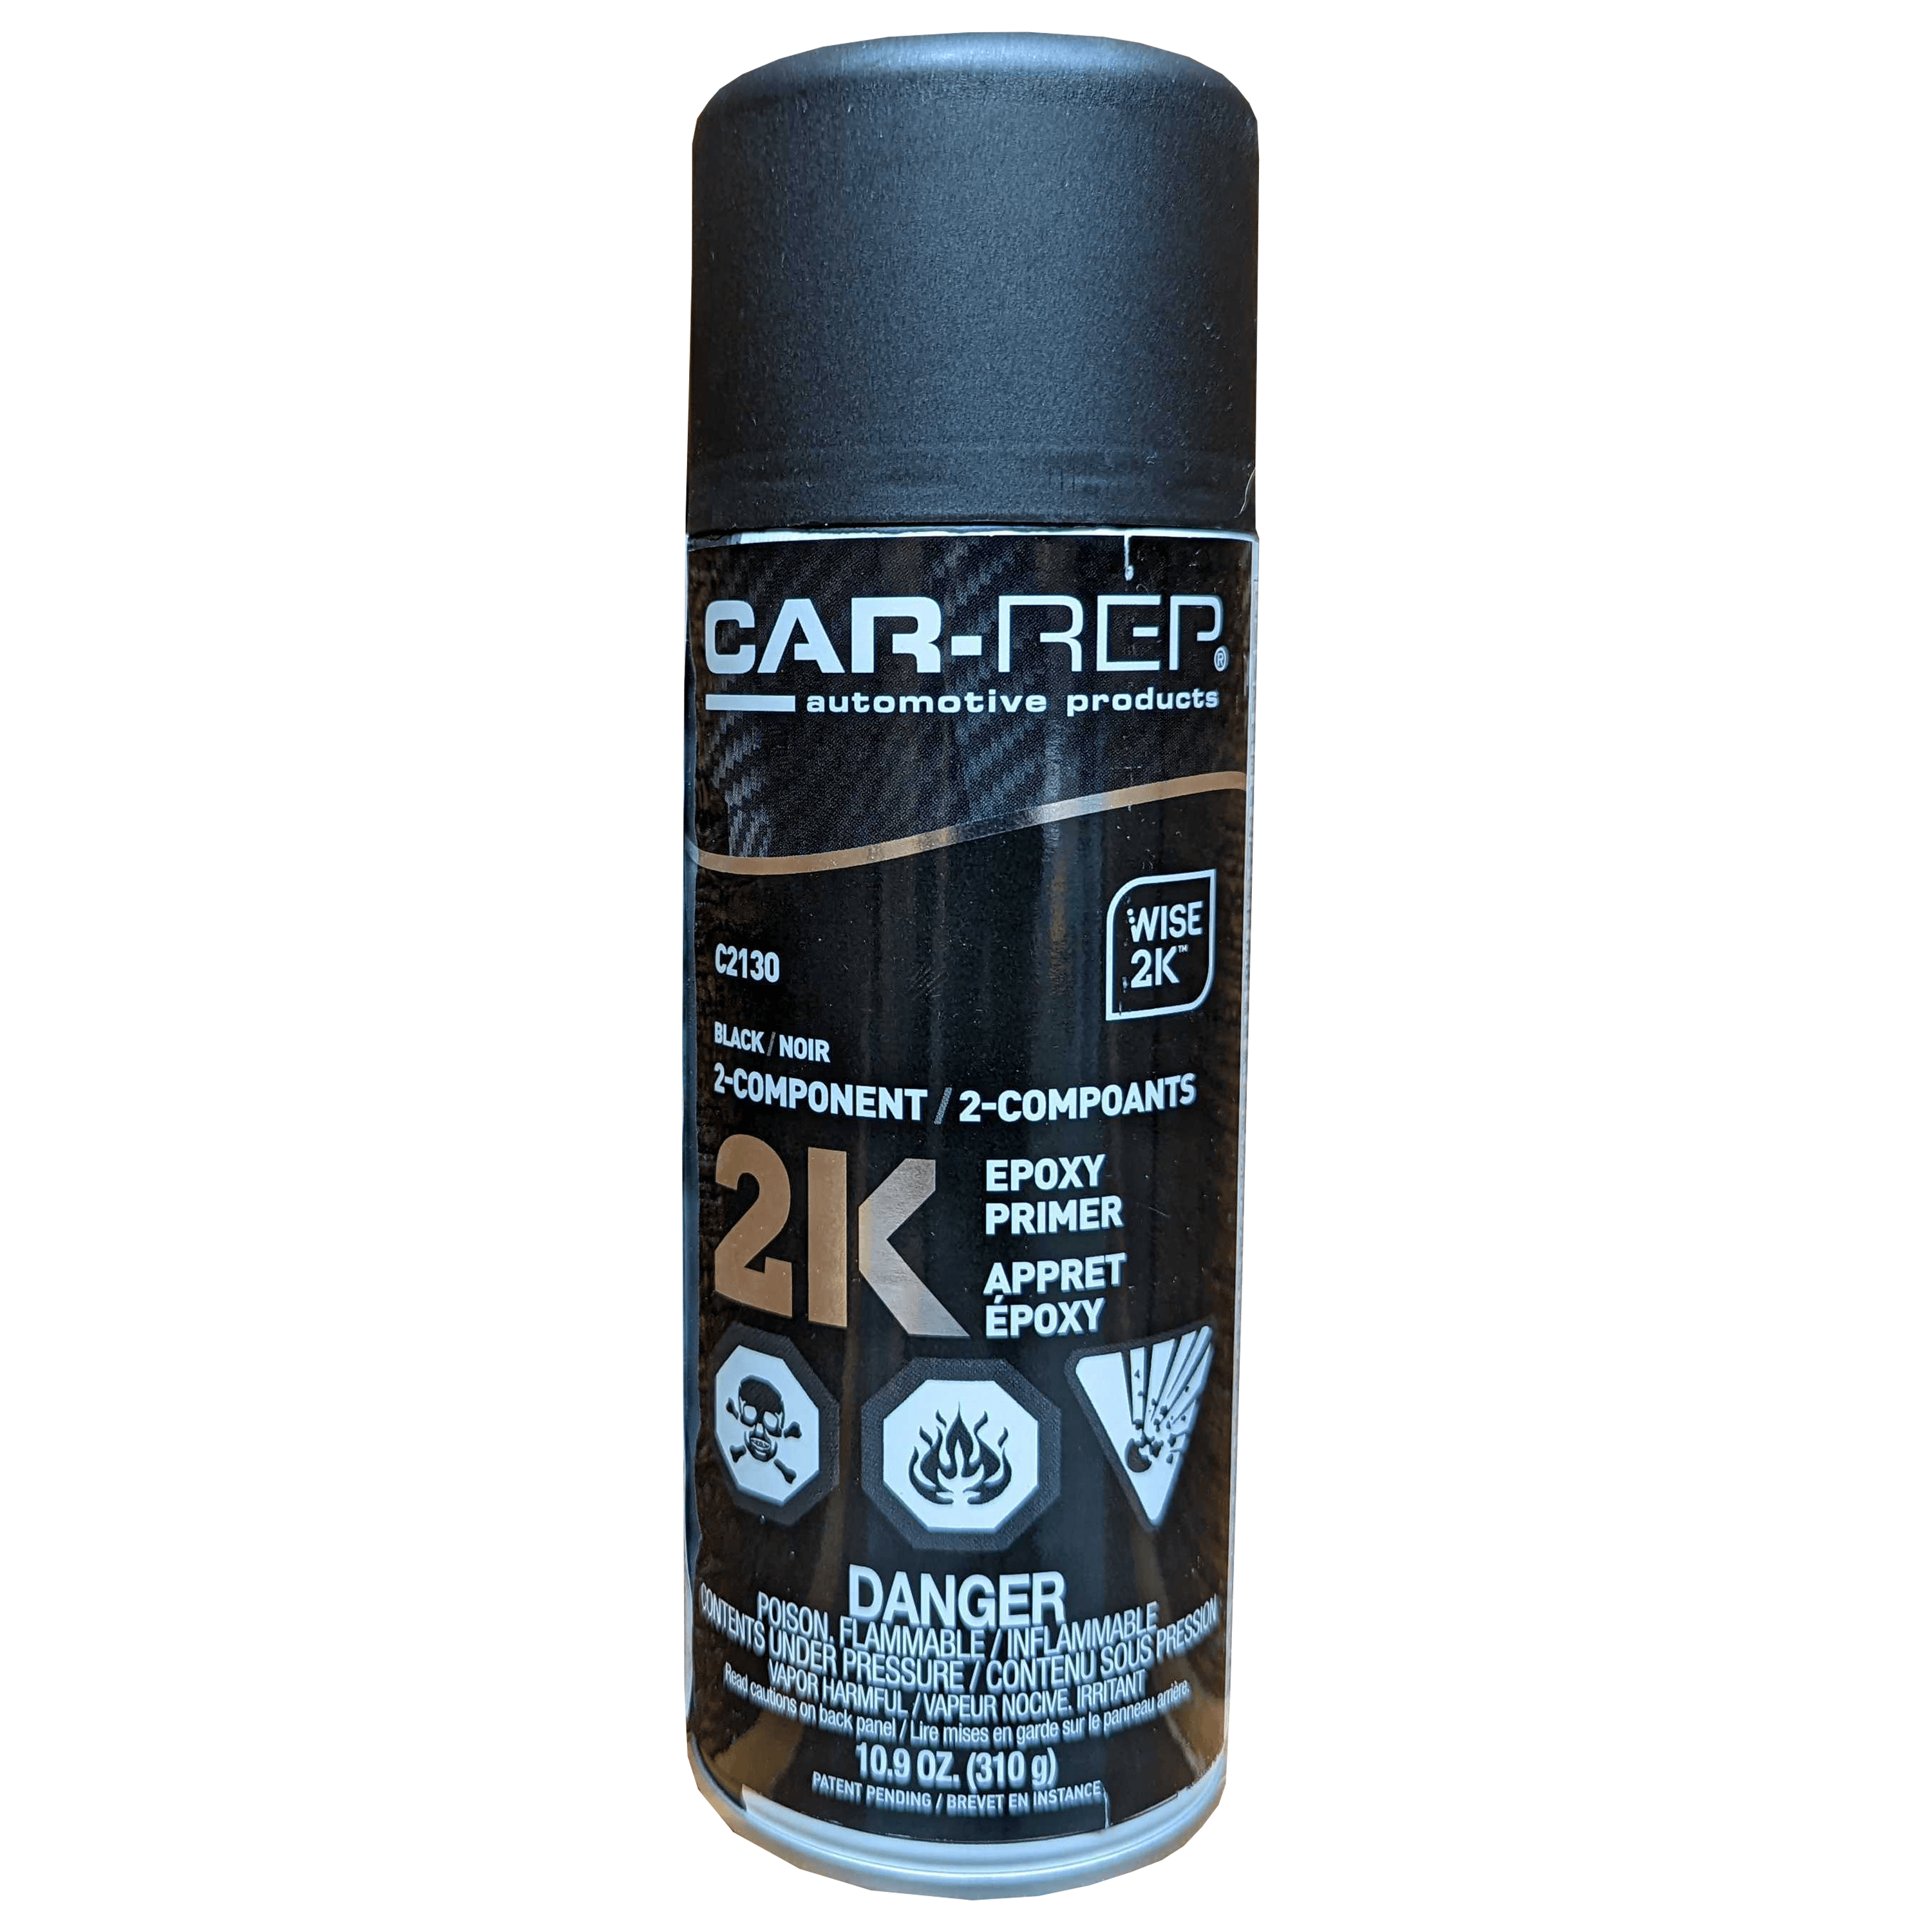 Car-Rep Automotive 2k Epoxy Primer Sealer Spray Can